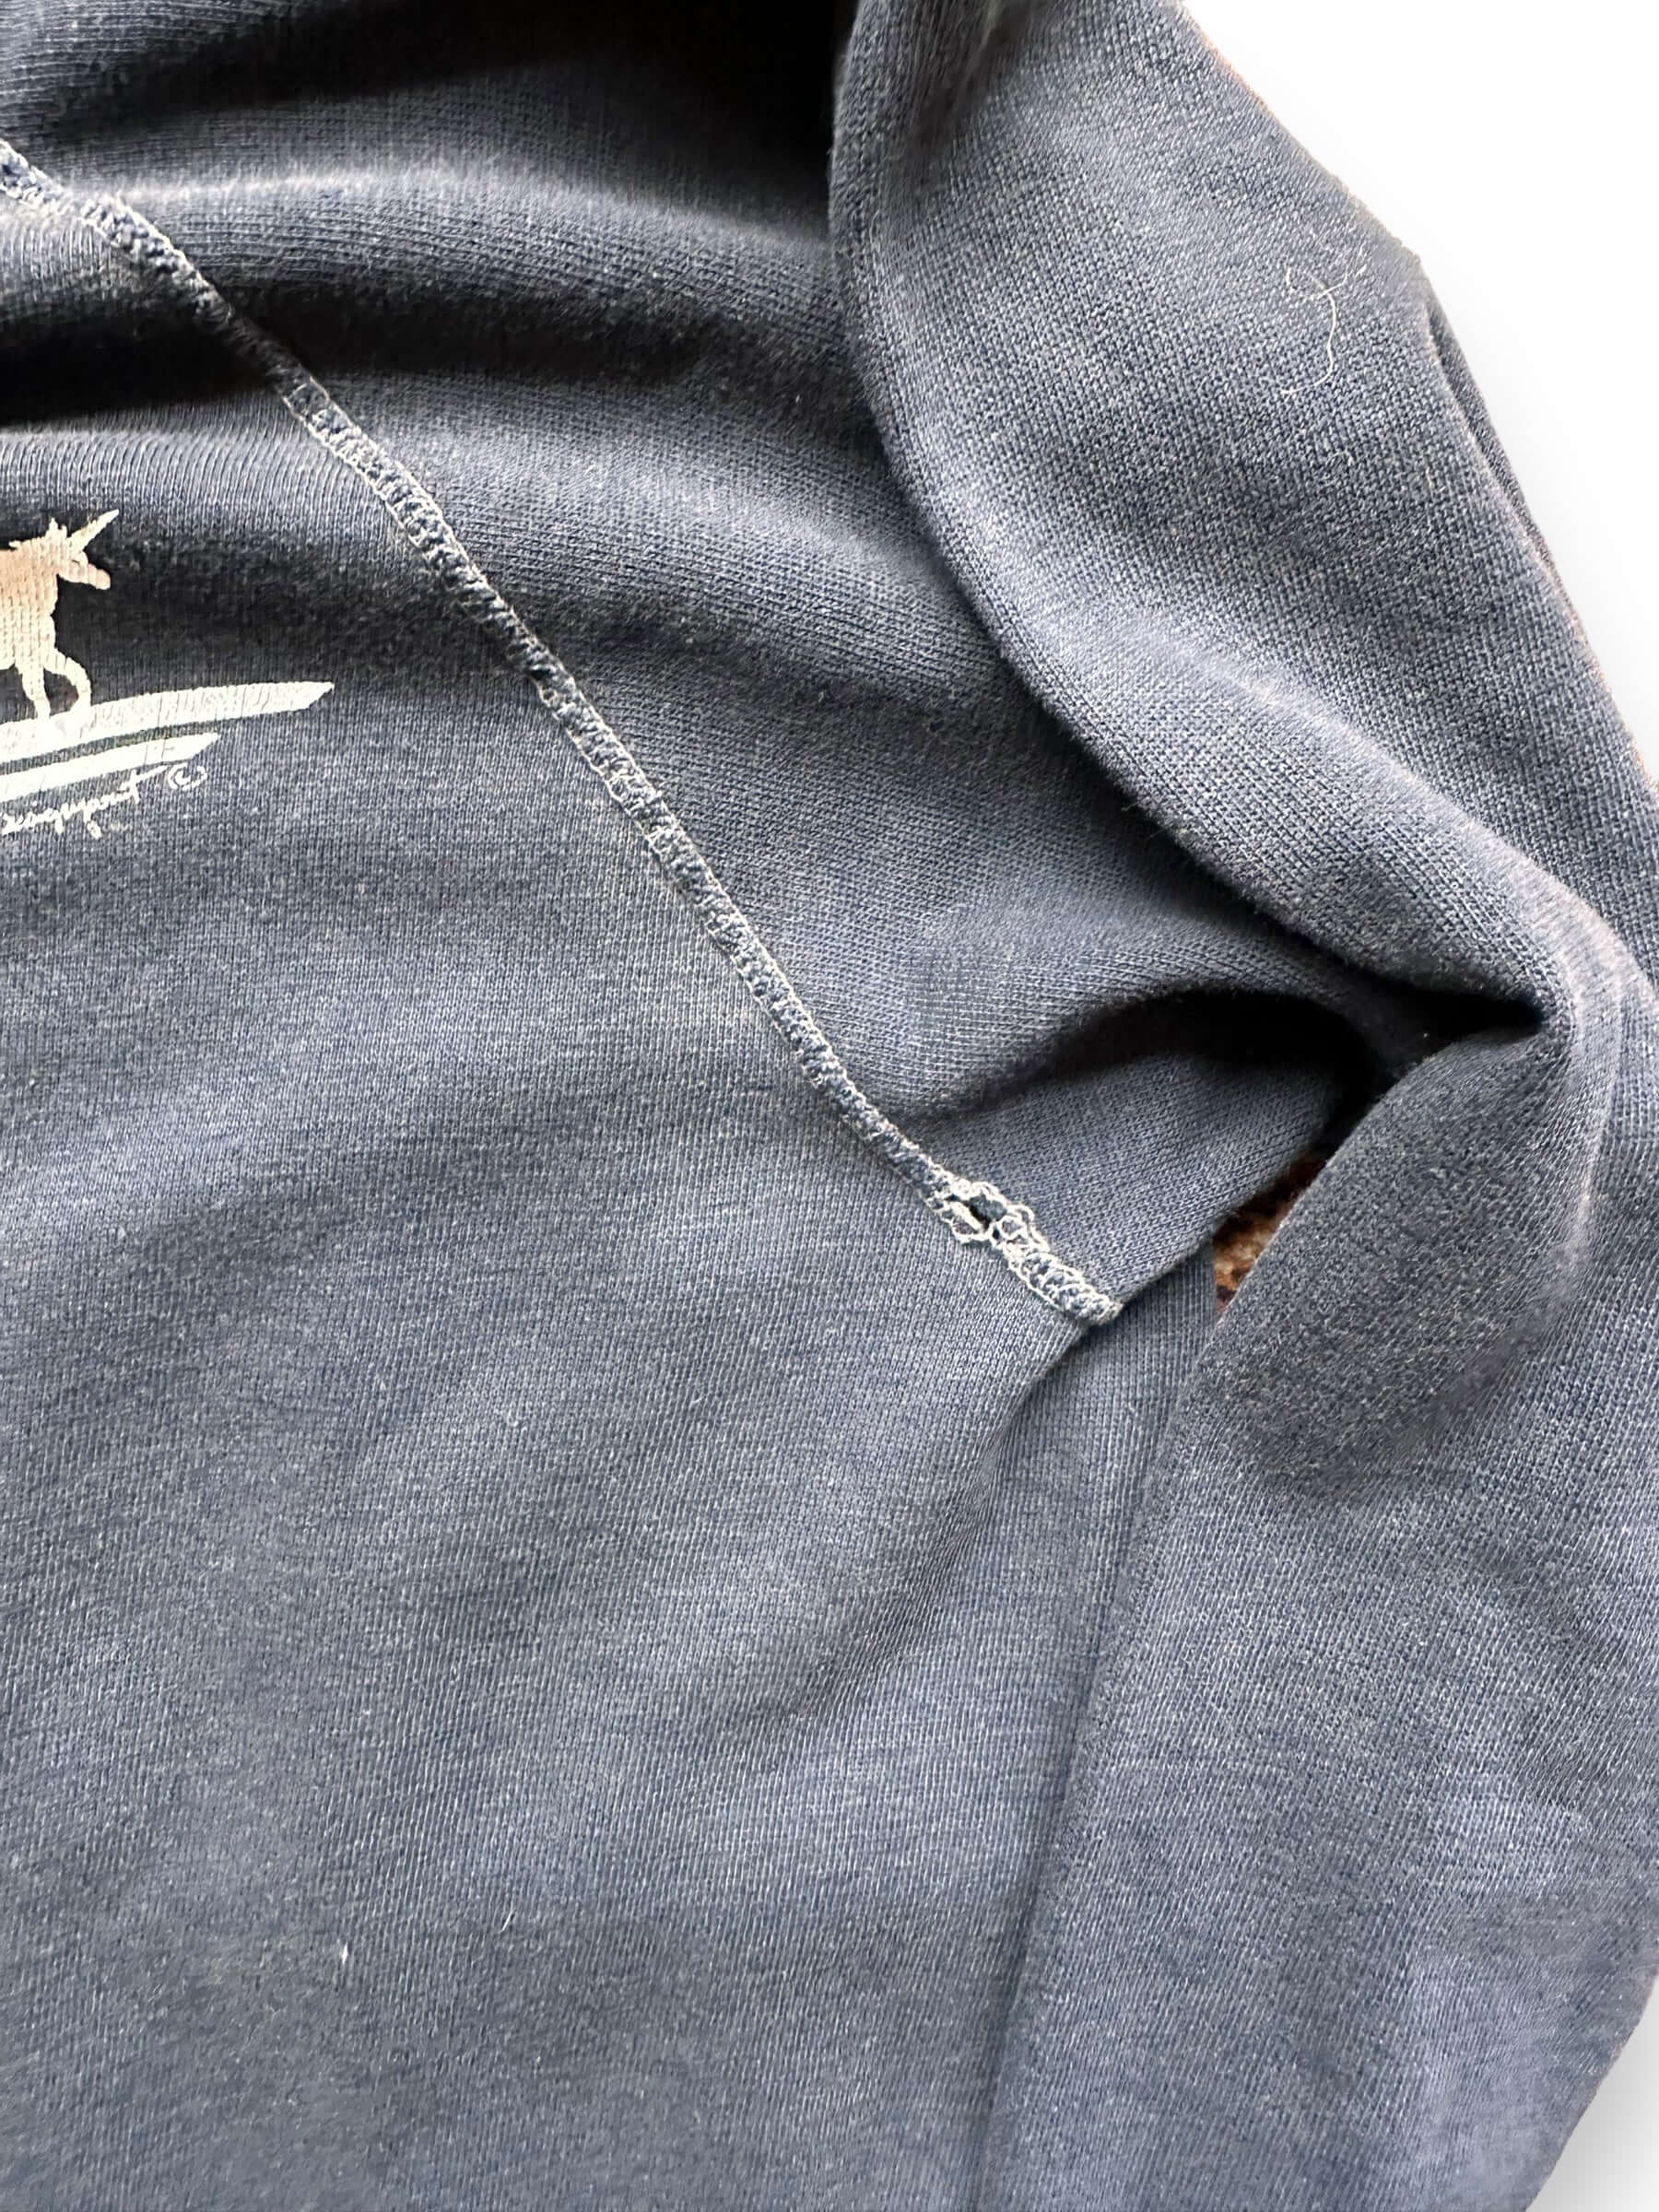 Dropped Stitch on Seam of Vintage Double Unicorn Crewneck SZ M | Vintage Sweatshirt Seattle